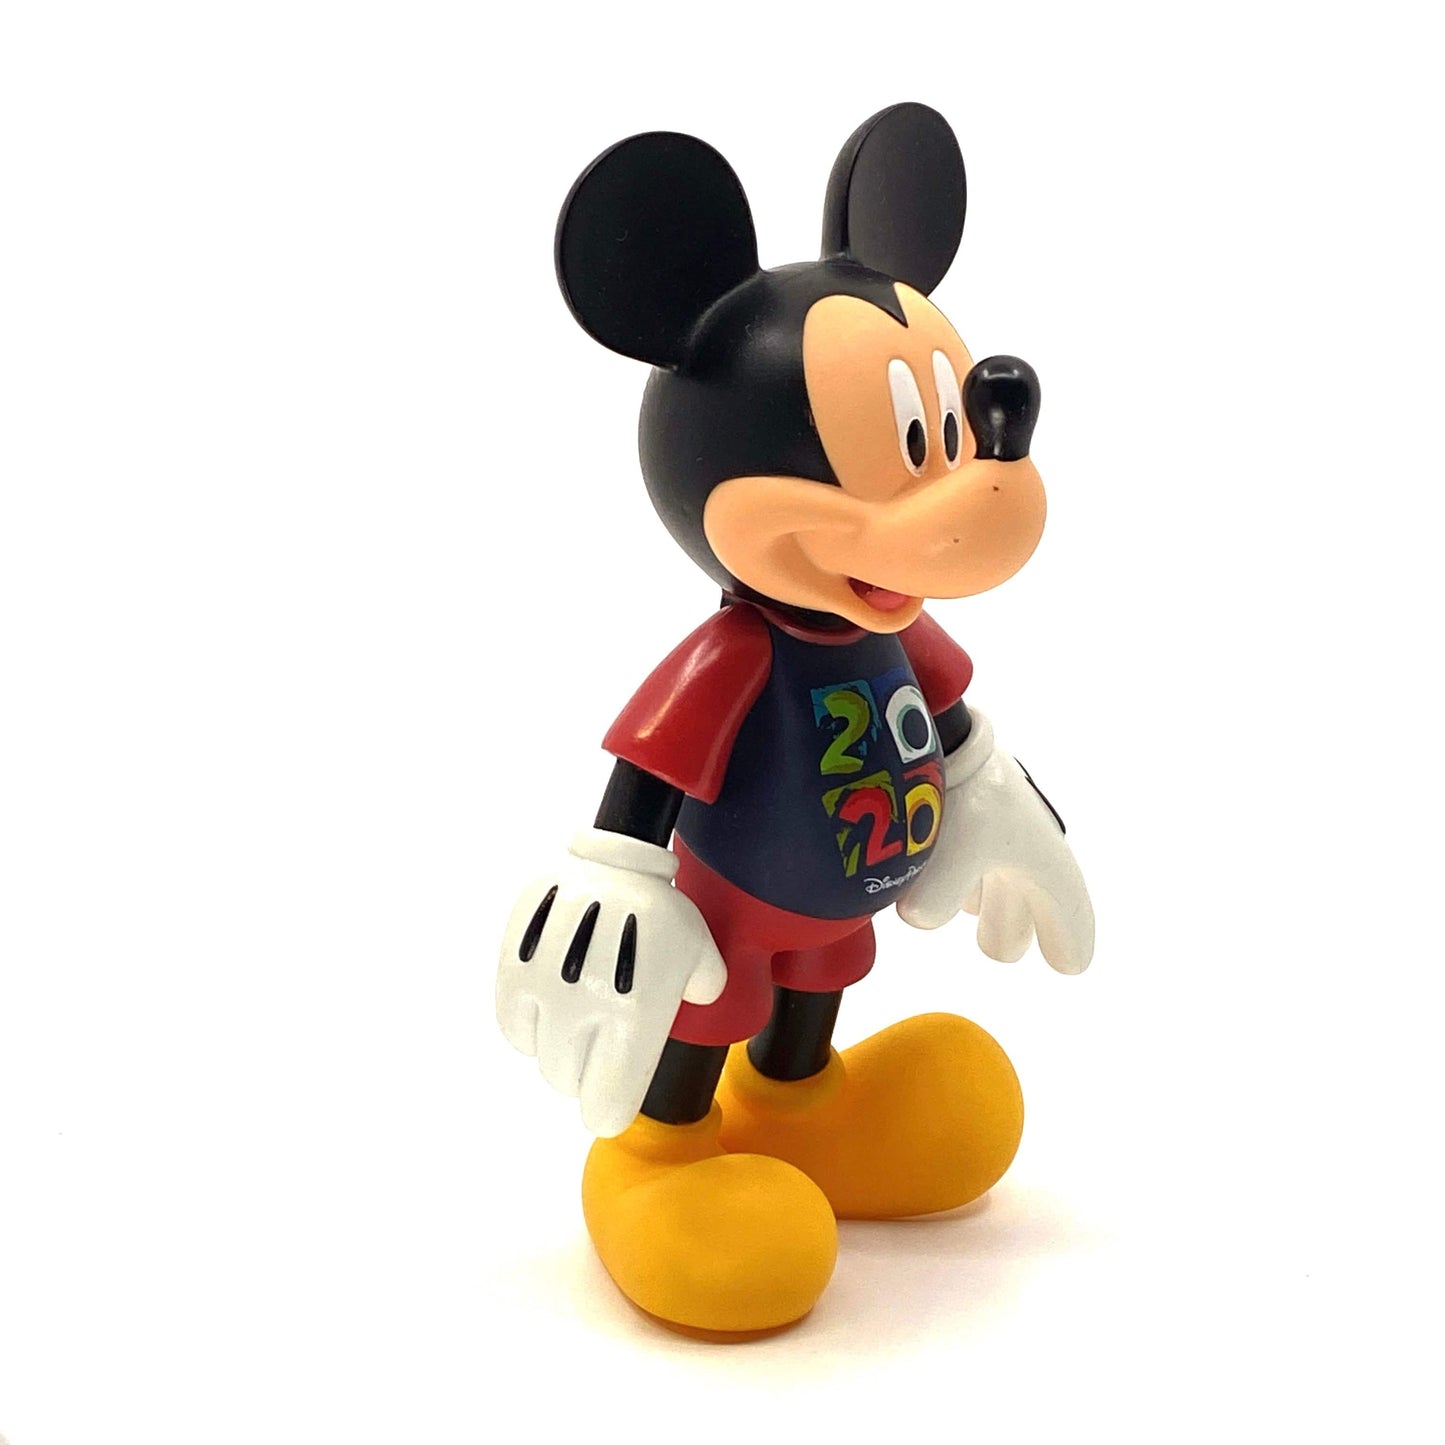 Disney 2020 Mickey Mouse Vinyl Articulated Figurine EUC